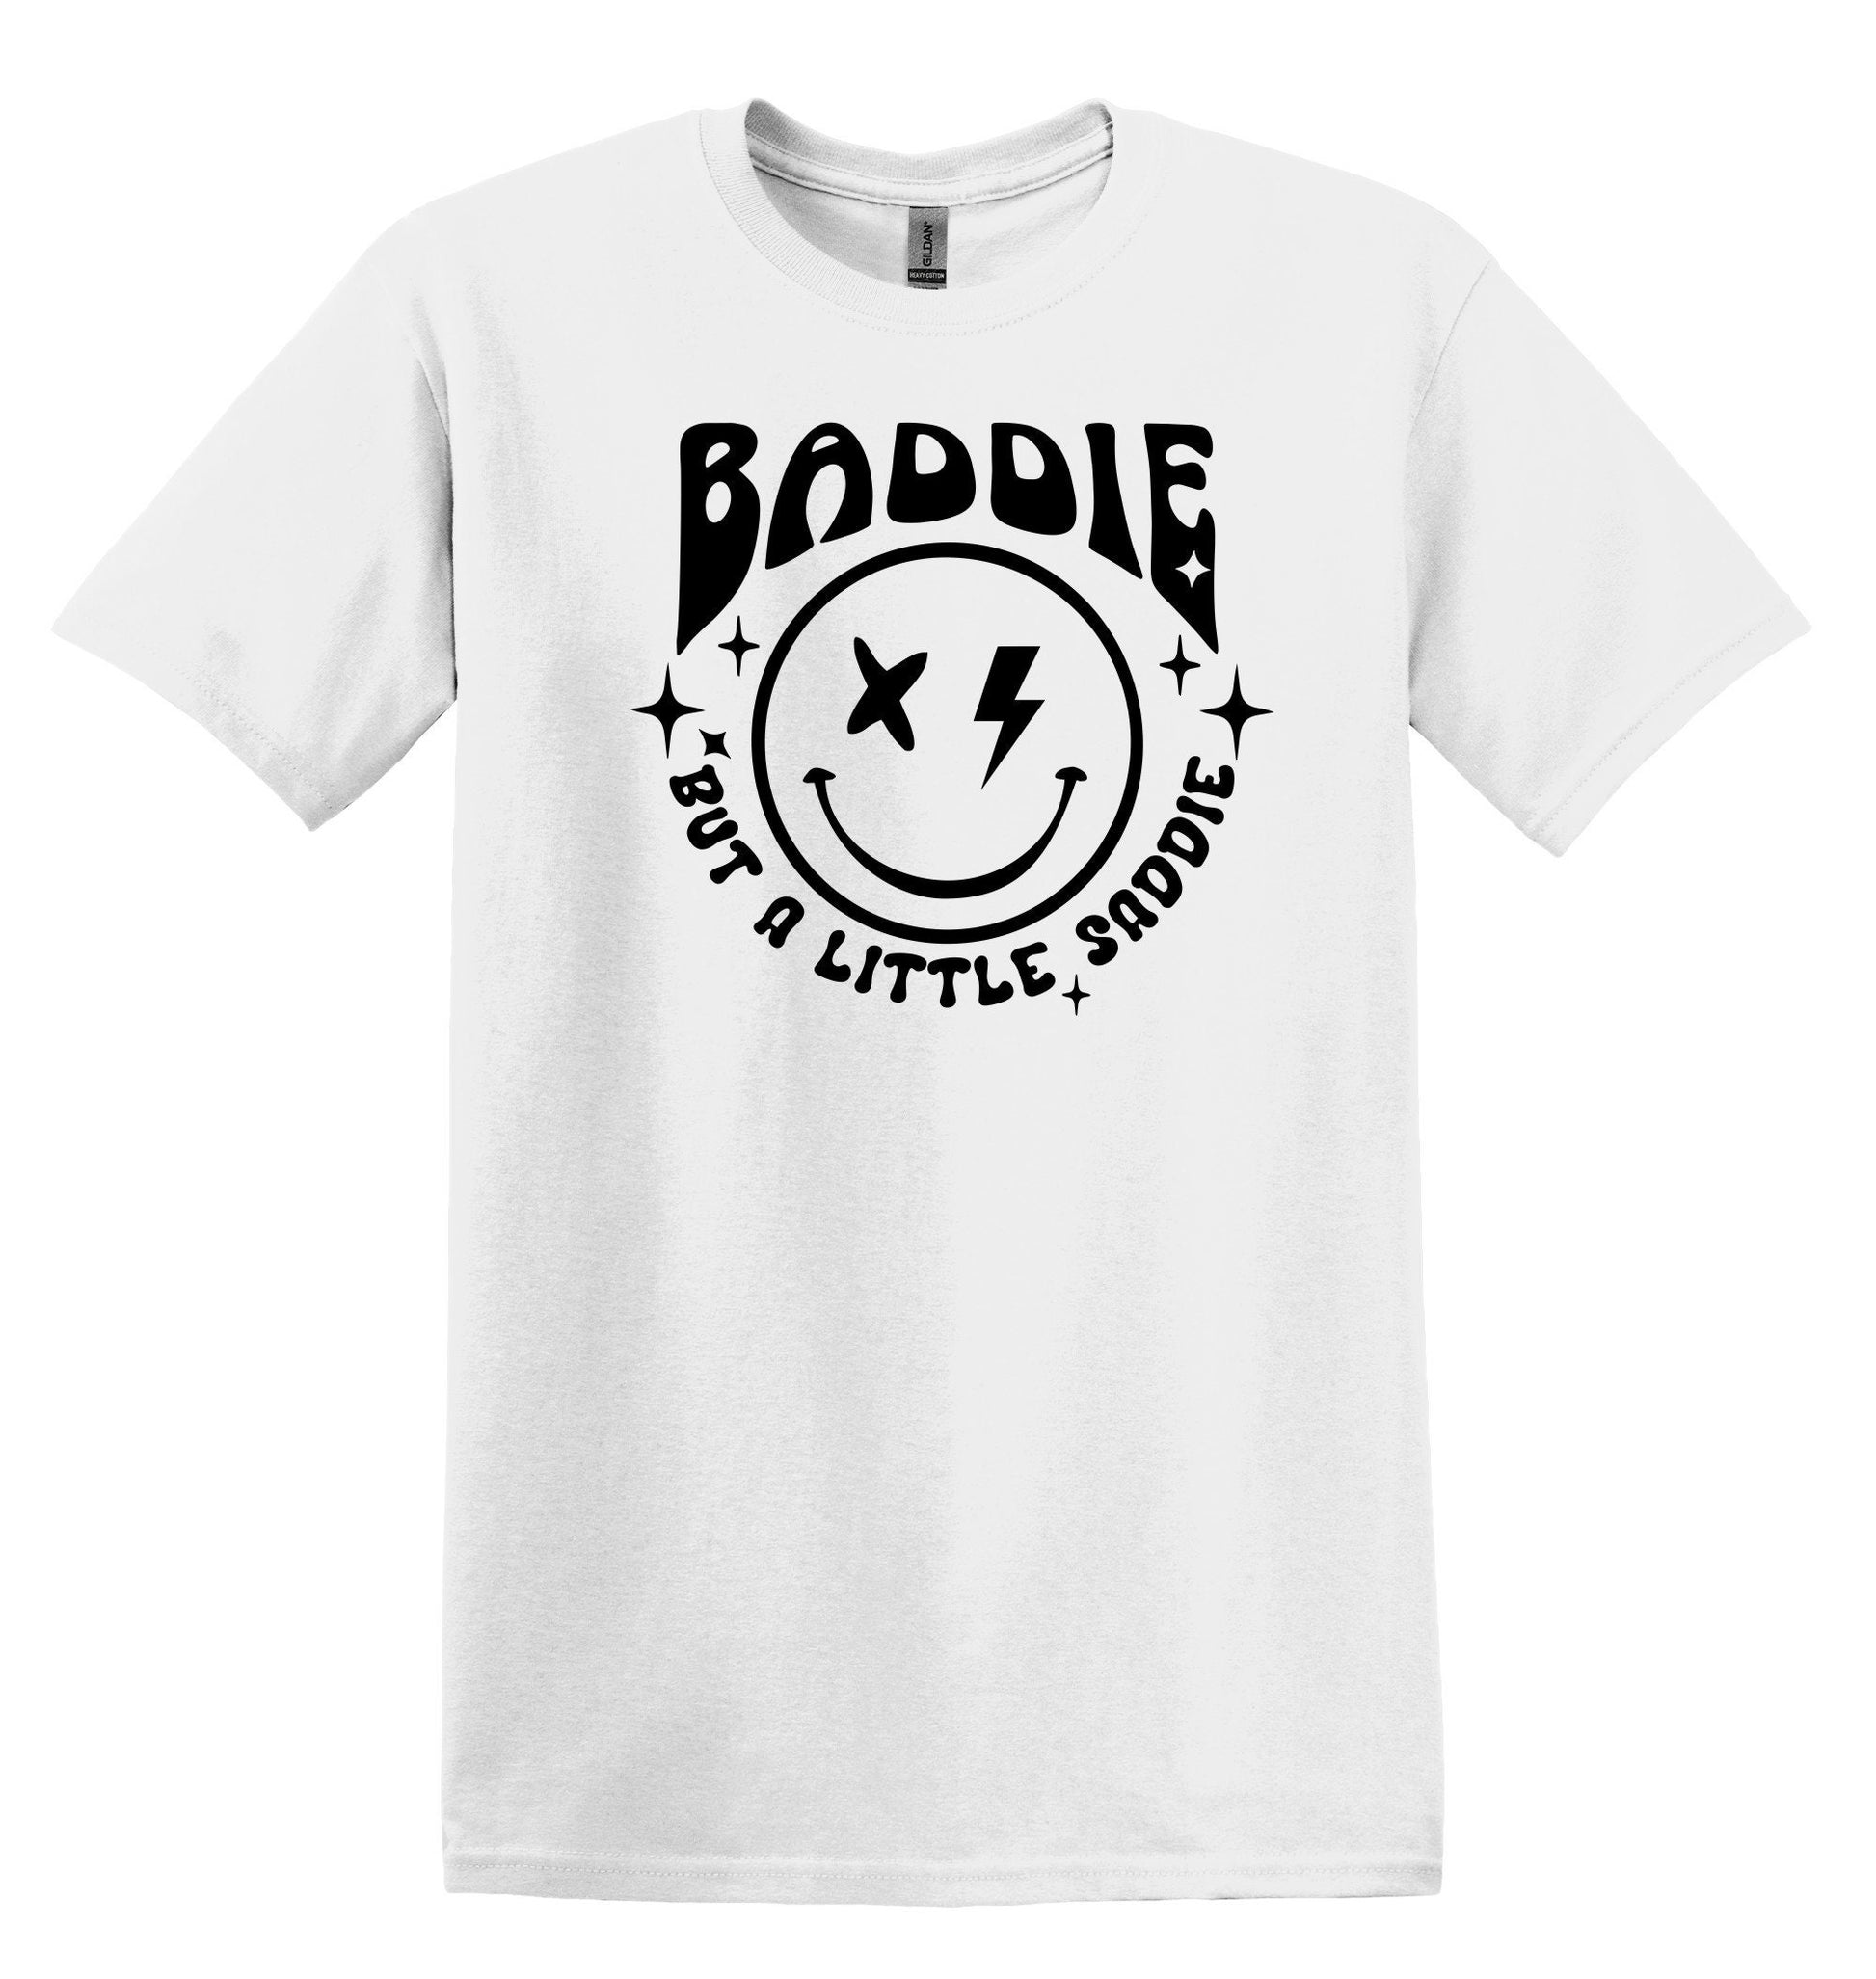 Baddie but a Little Saddie T-shirt Graphic Shirt Funny Adult TShirt Vintage Funny TShirt Nostalgia T-Shirt Relaxed Cotton Tee T-Shirt